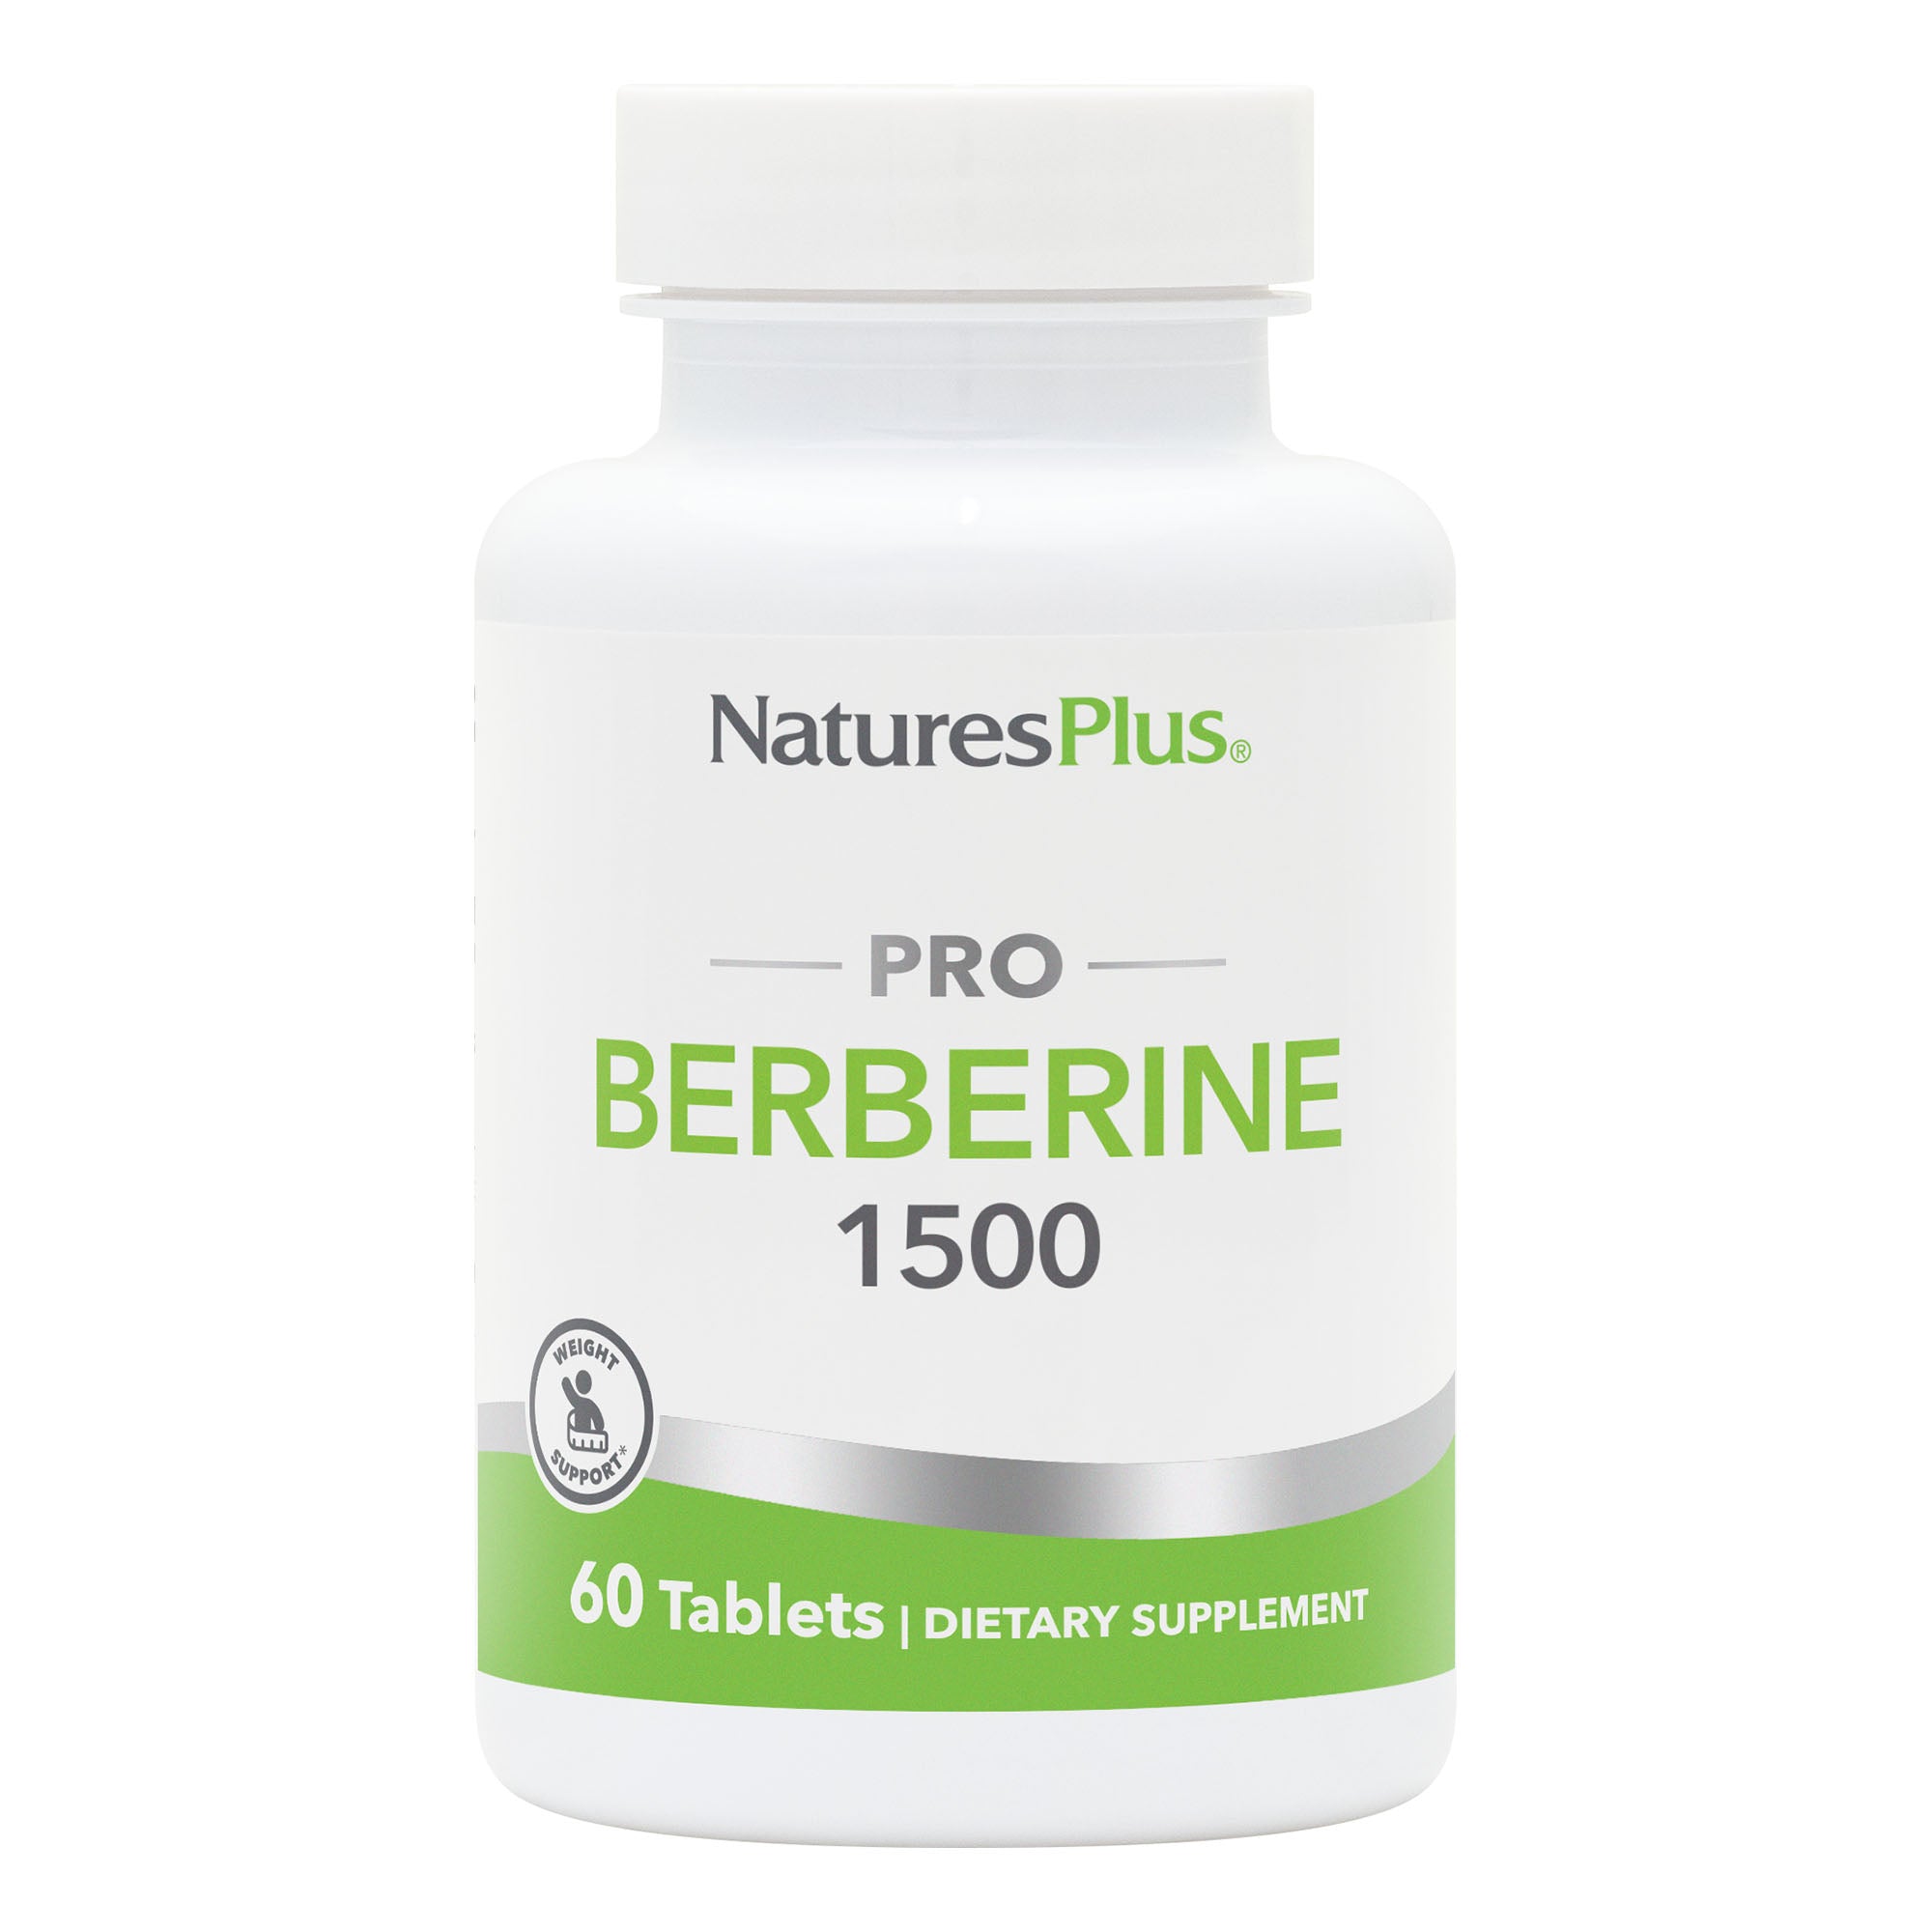 NaturesPlus PRO Berberine 1500 MG Tablets